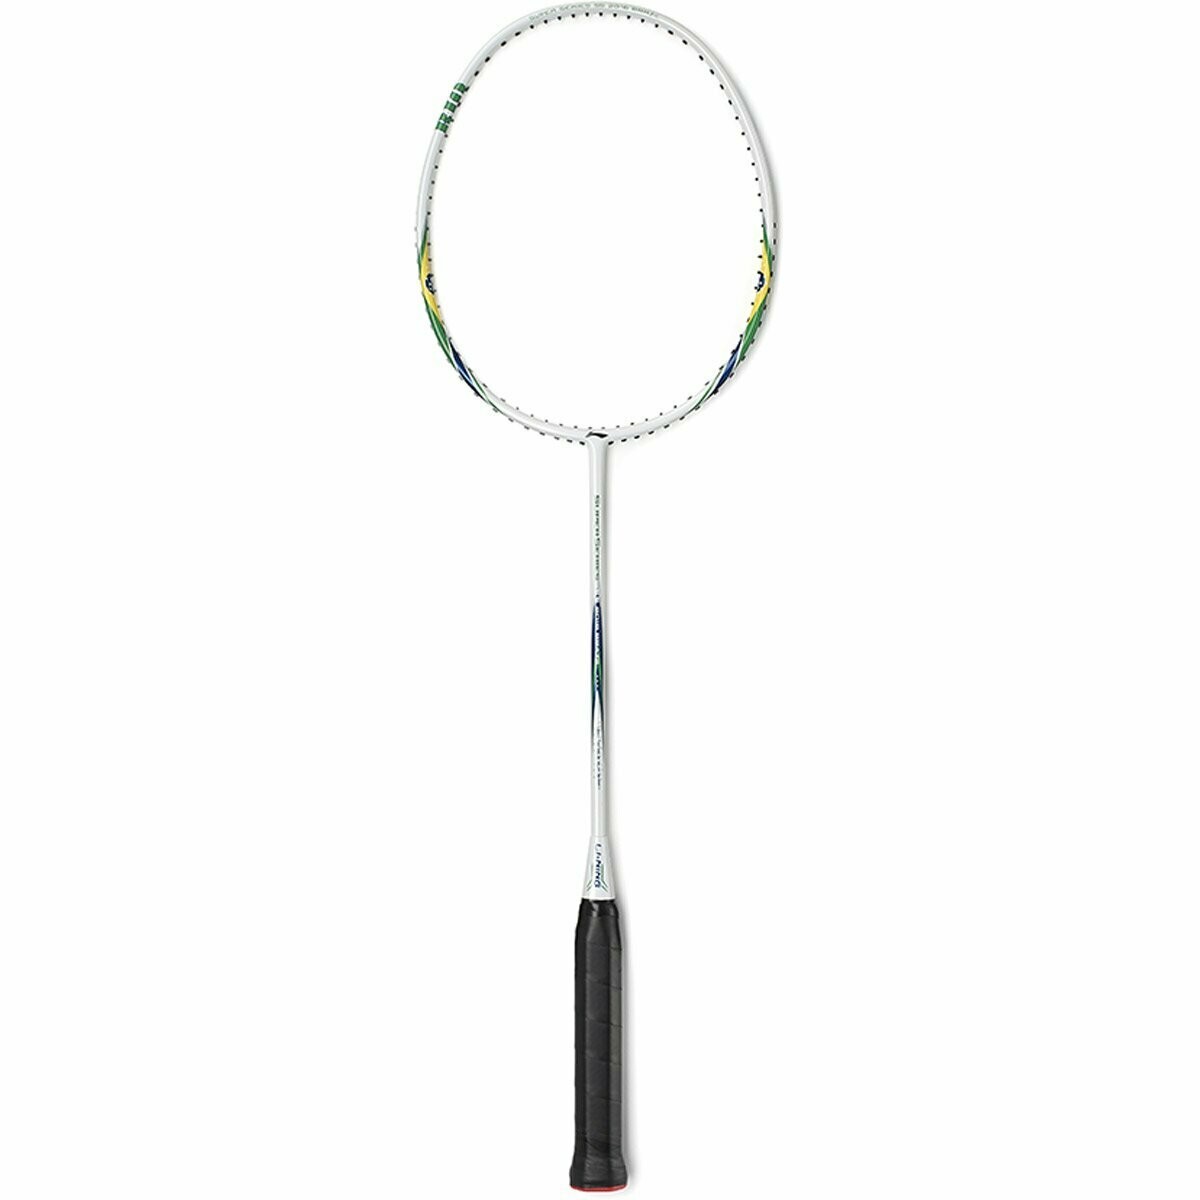 LI-NING Superseries 2016 Brazil Badminton Racquet